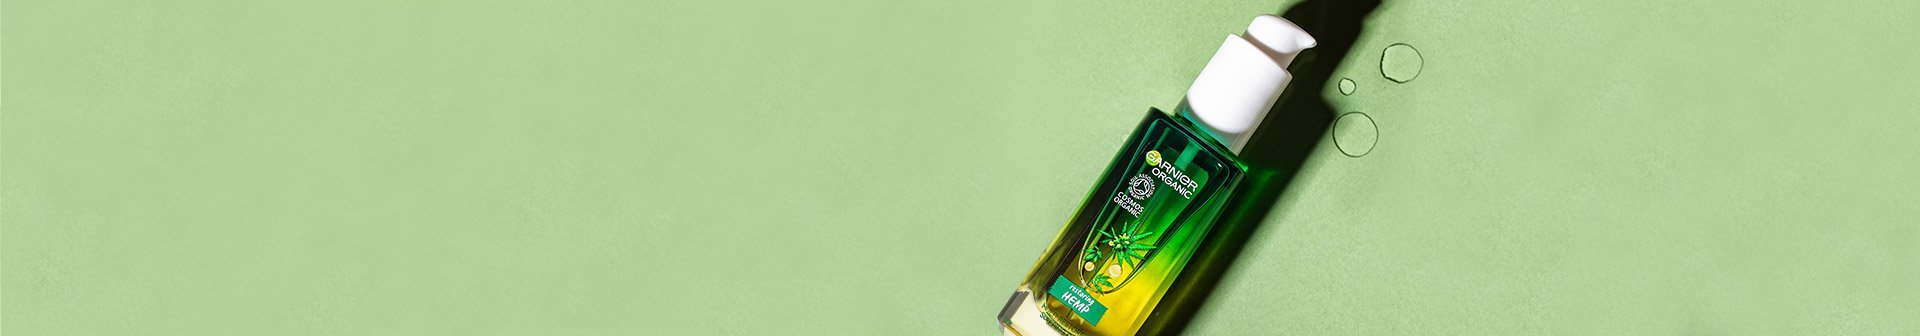 hemp oil on green background